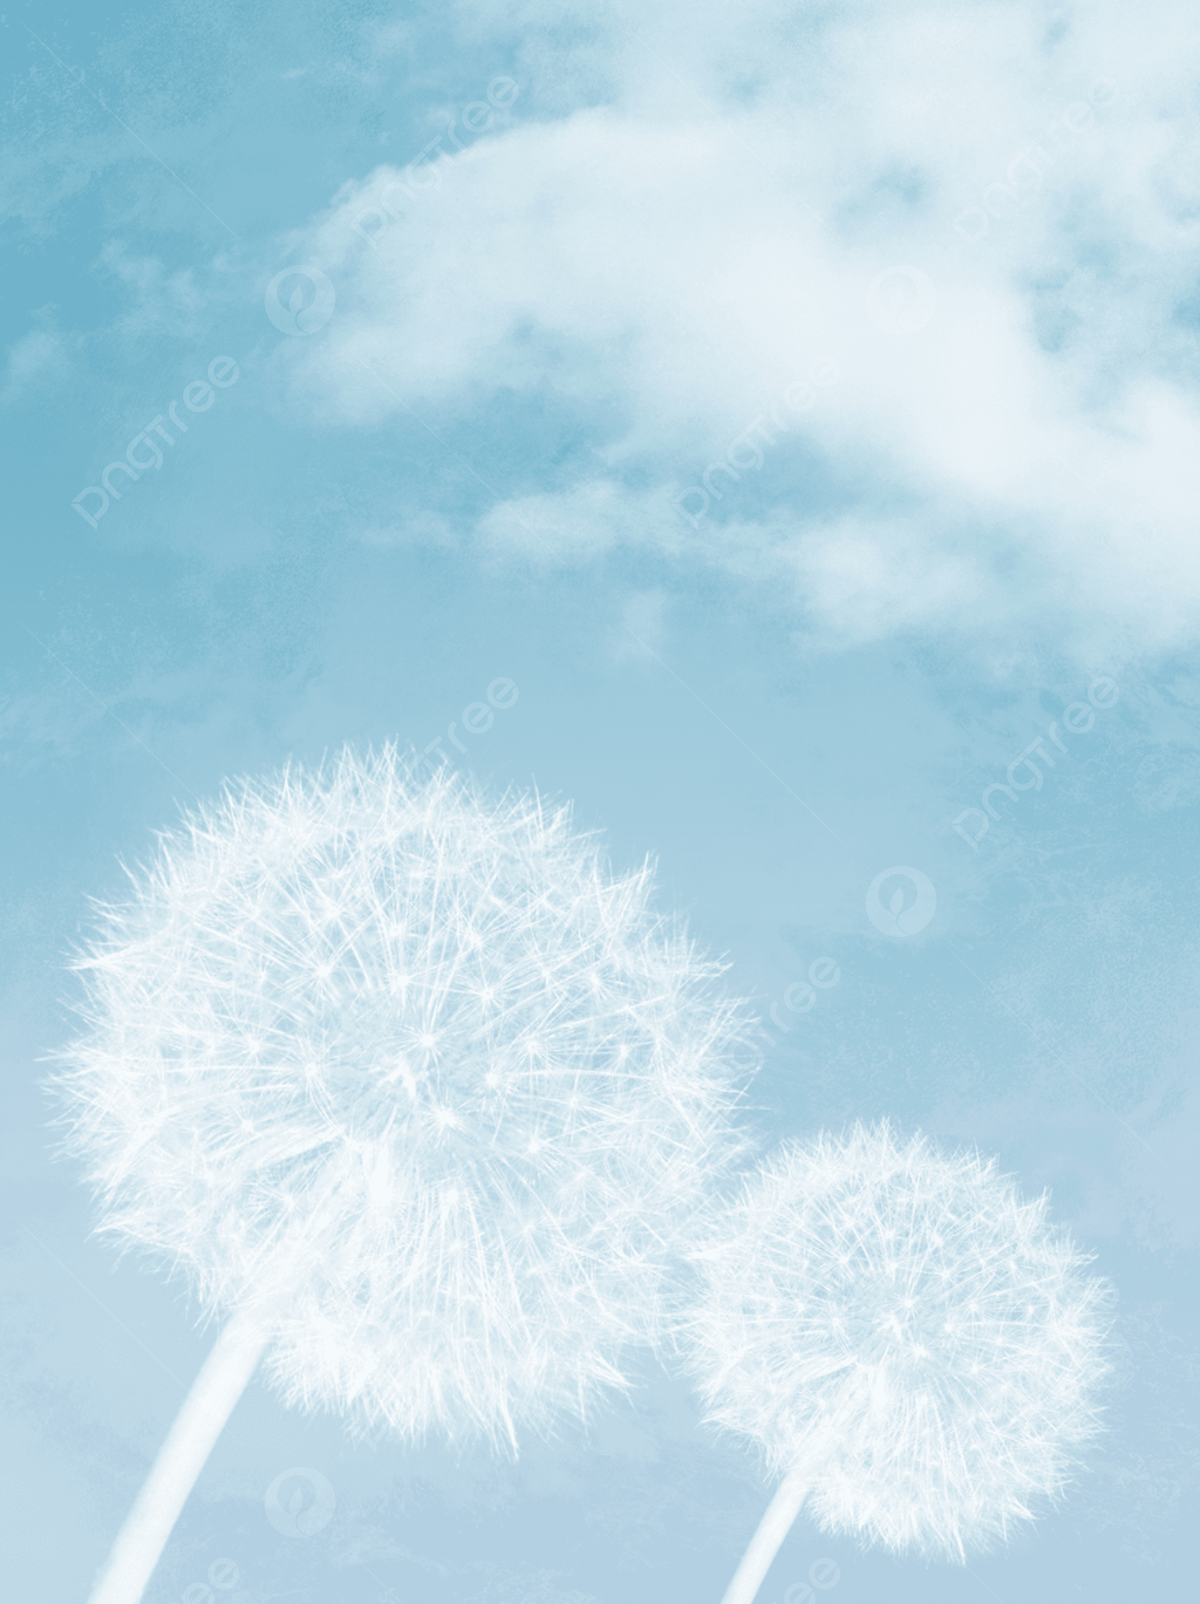 Sky Blue Gradient Aesthetic Dandelion General Background Wallpaper Image For Free Download